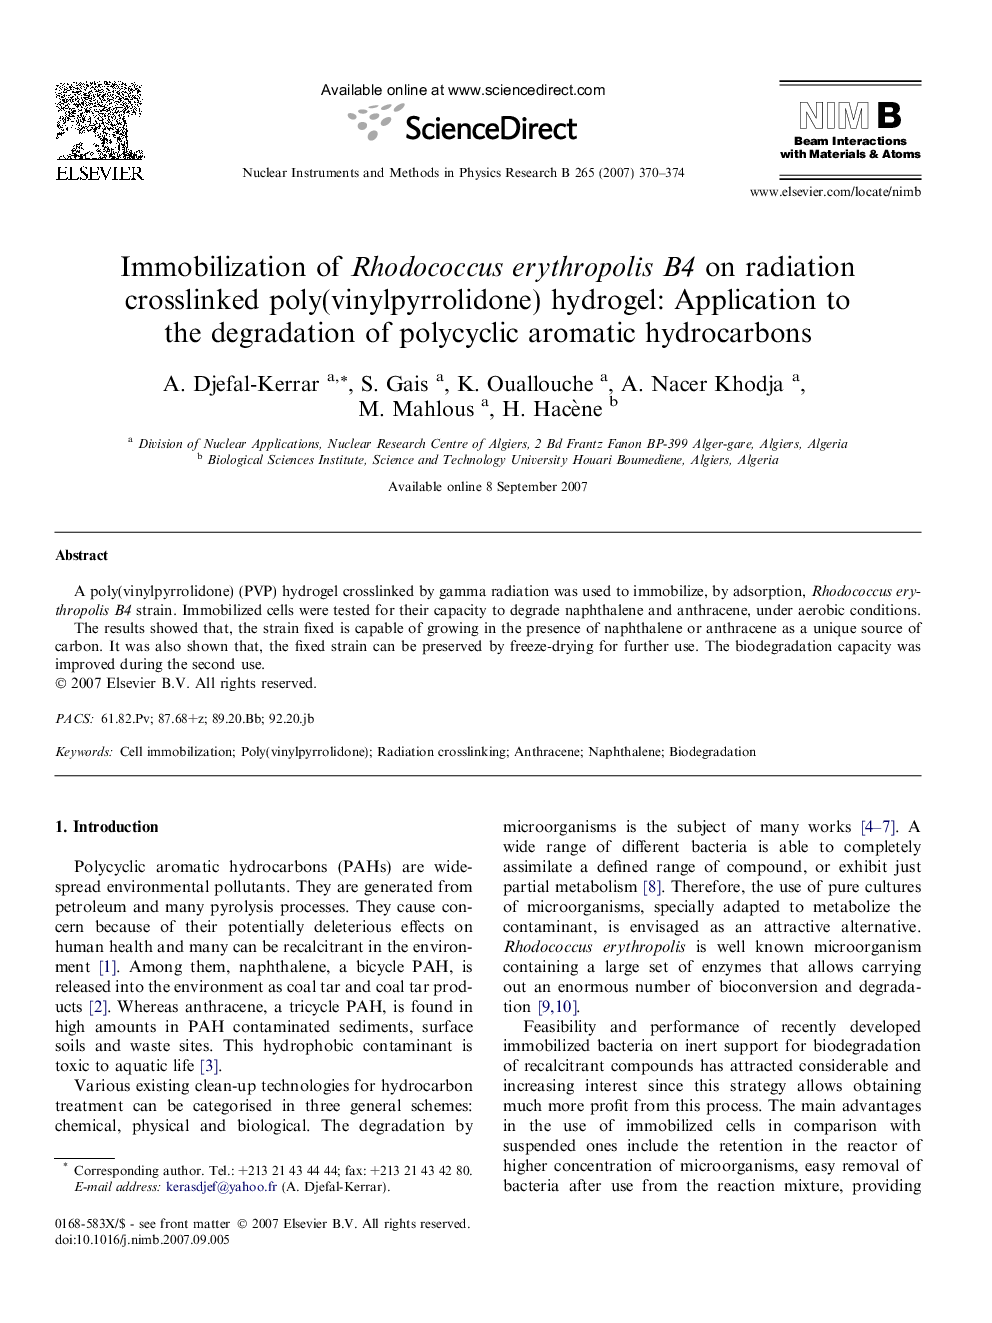 Immobilization of Rhodococcus erythropolis B4 on radiation crosslinked poly(vinylpyrrolidone) hydrogel: Application to the degradation of polycyclic aromatic hydrocarbons